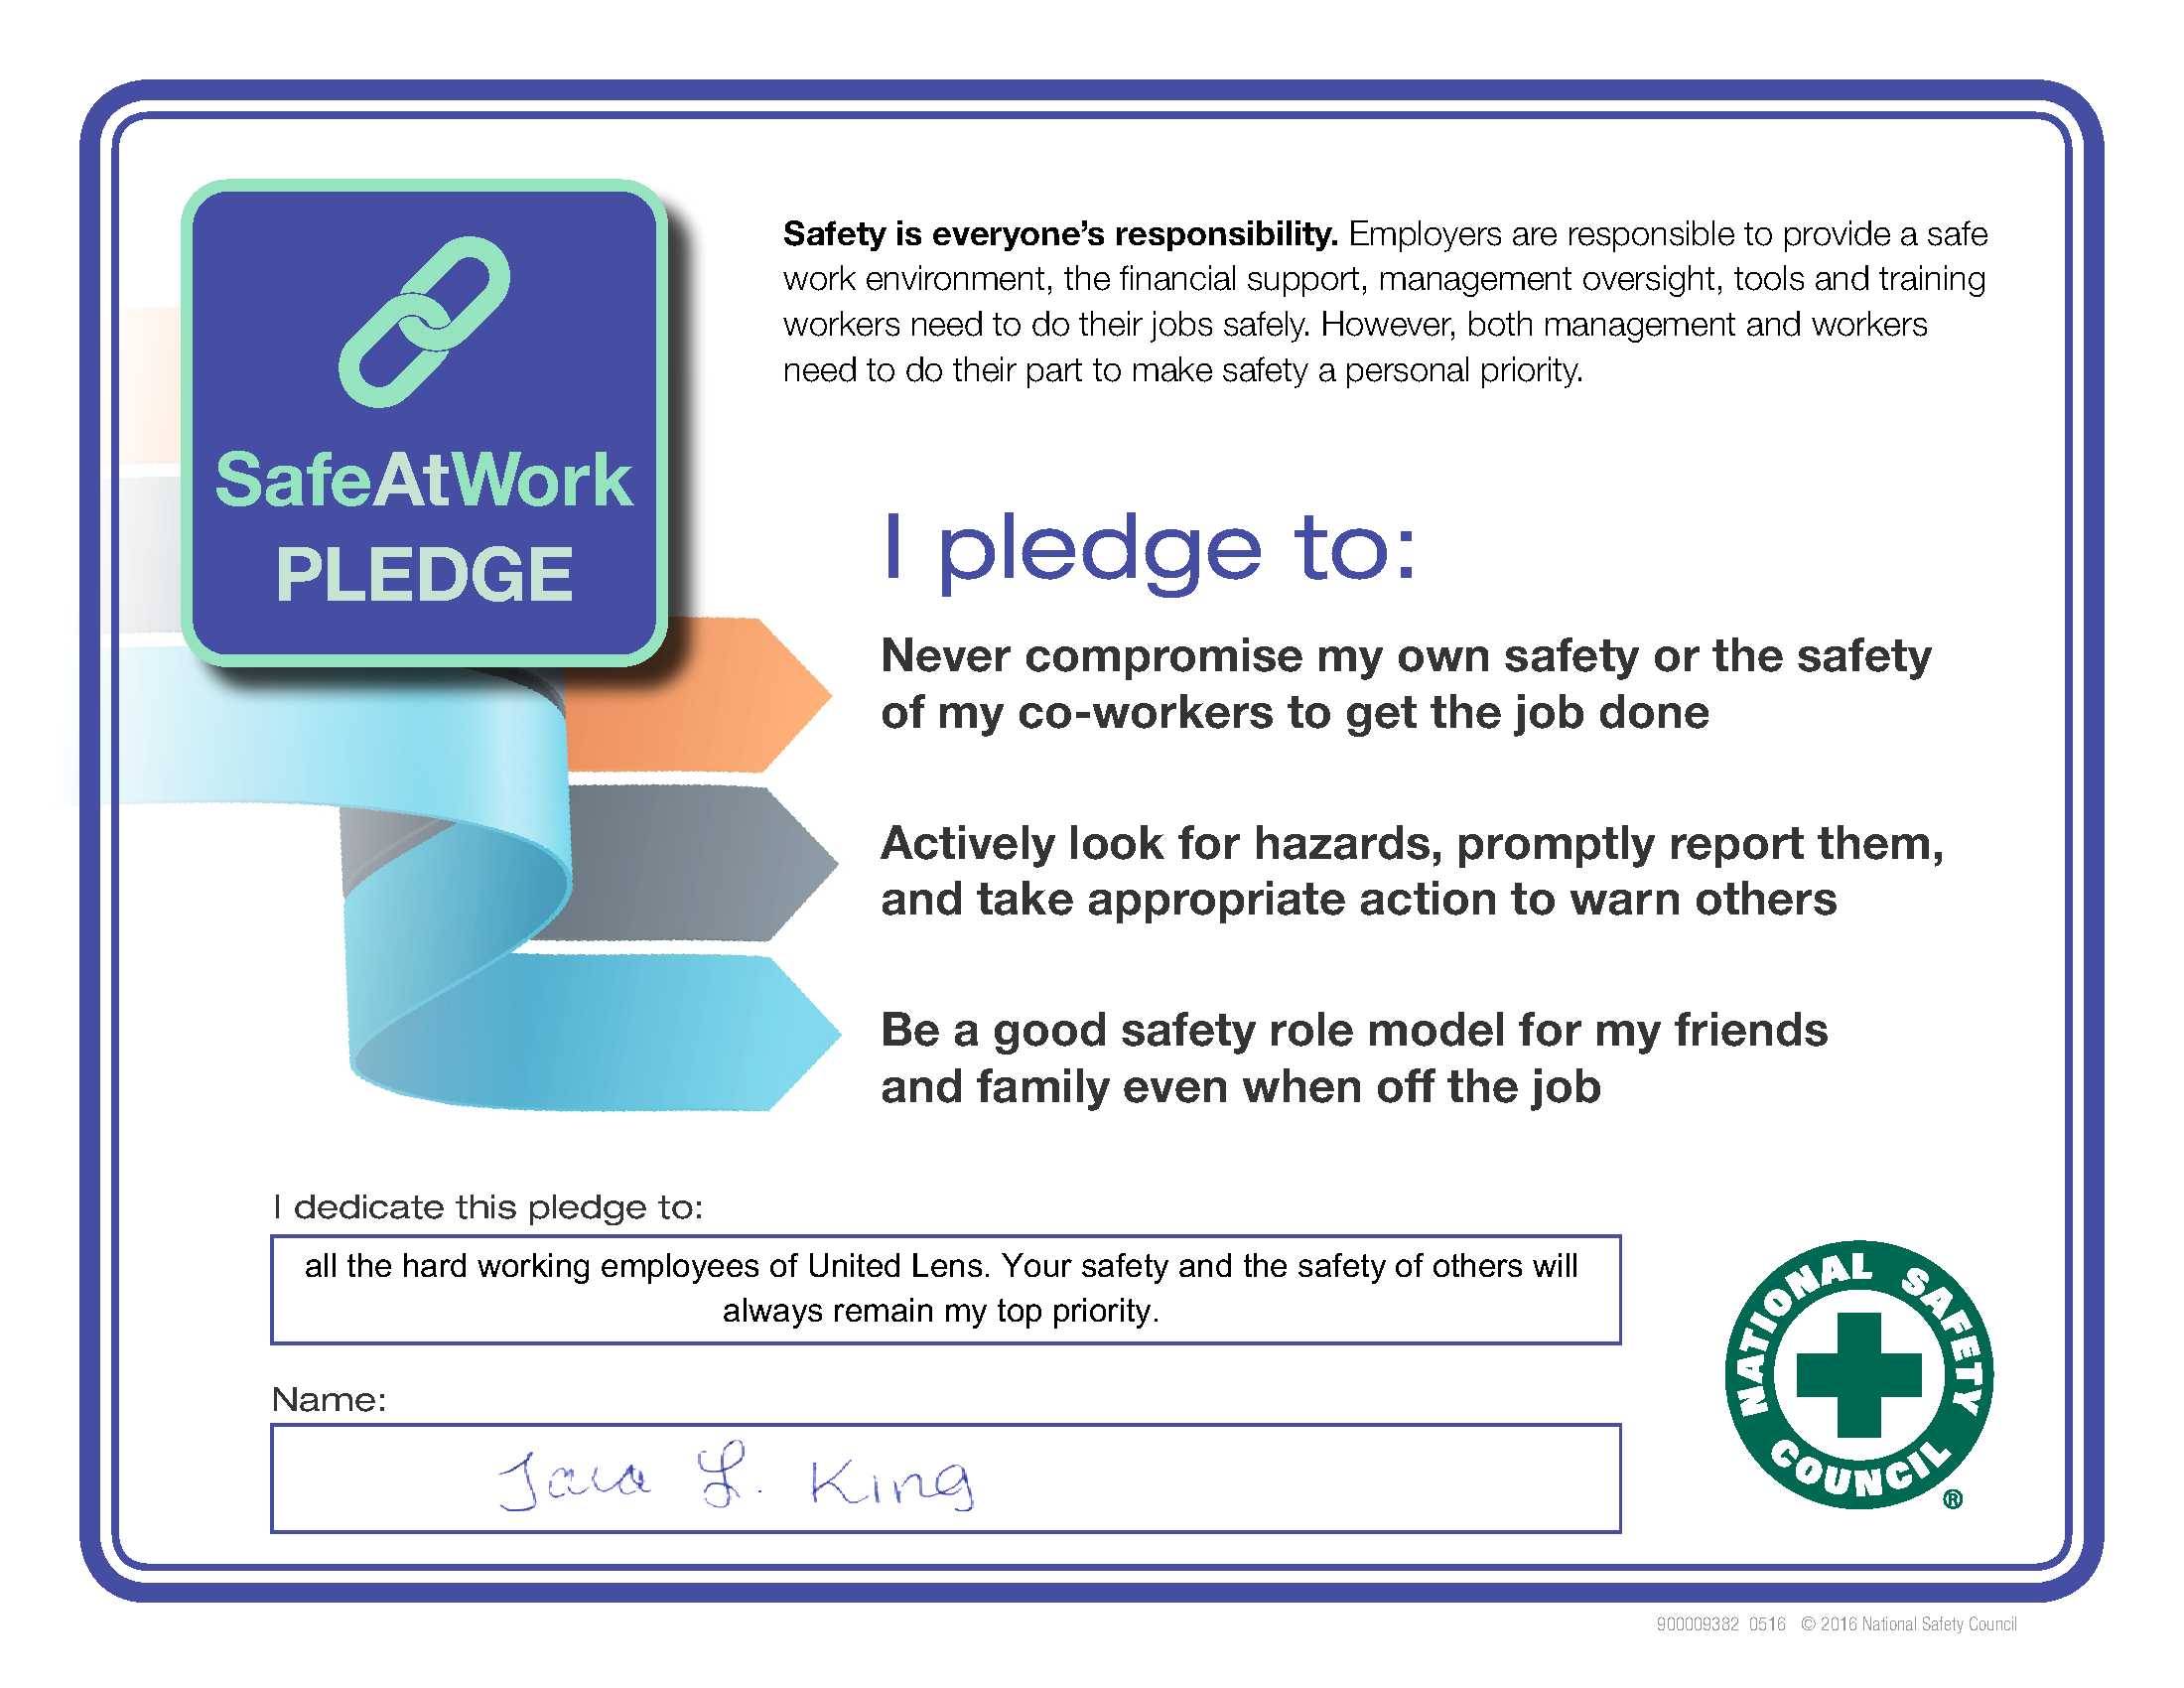 Safe at Work Pledge